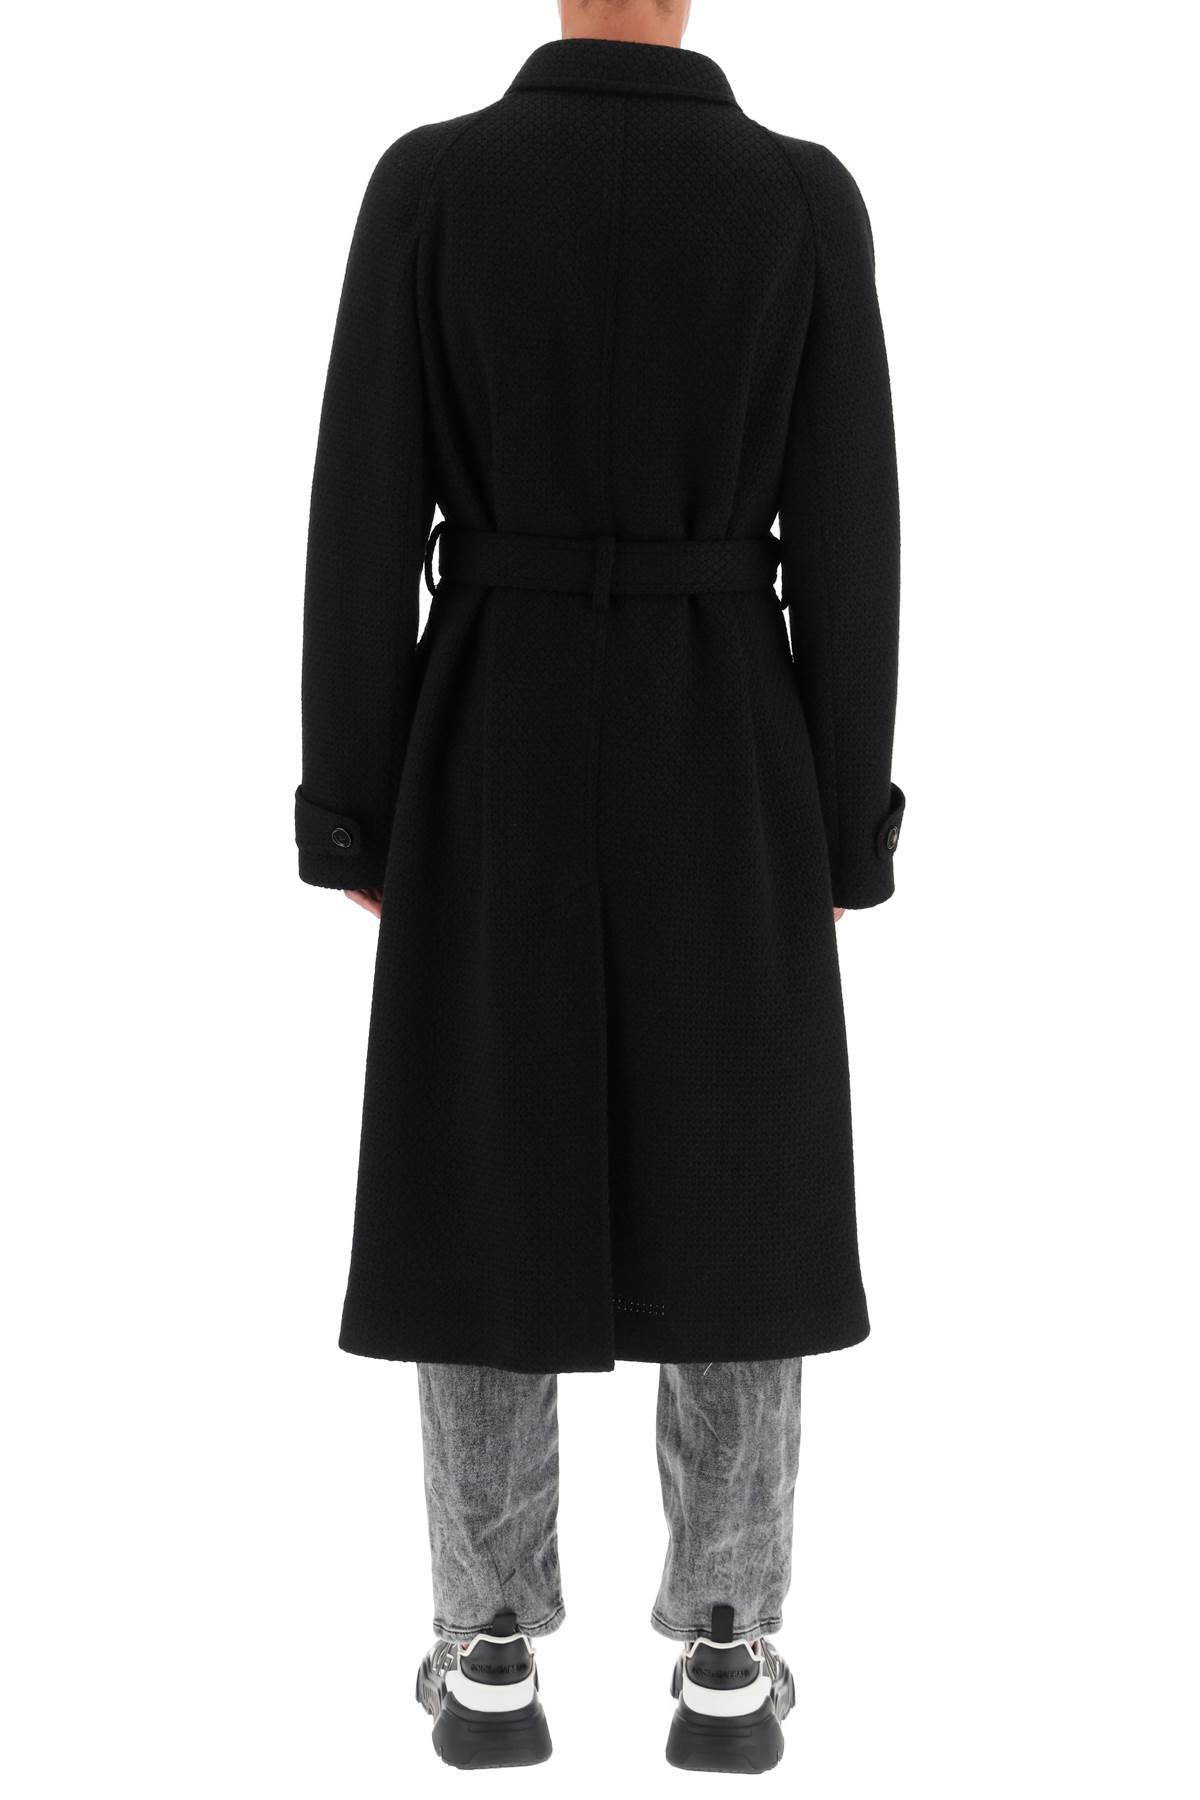 Dolce & Gabbana Tailored Wool Blend Knit Coat   Black